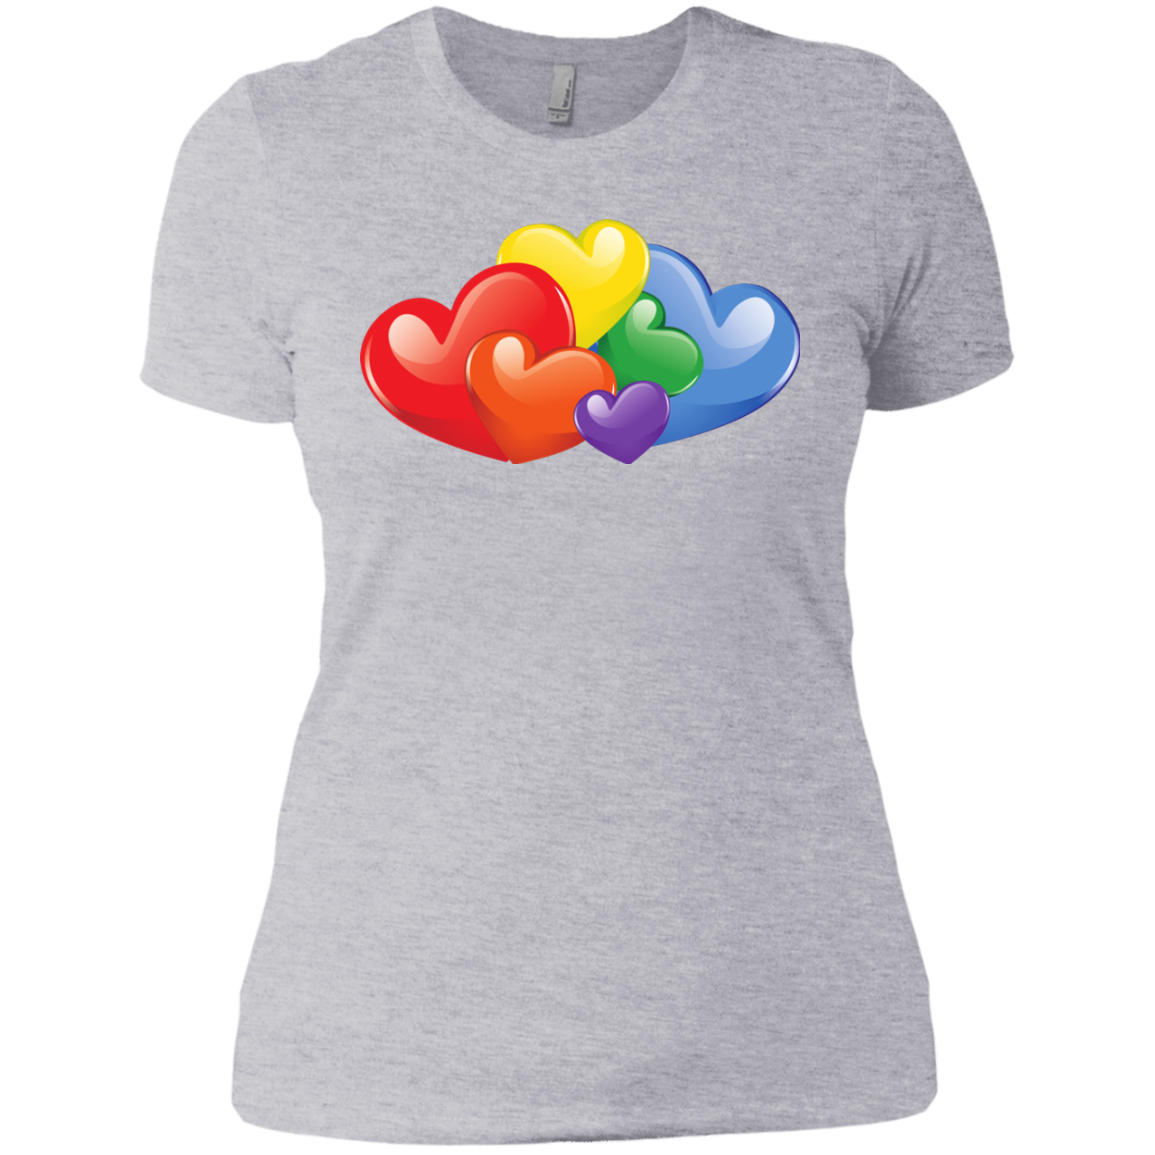 Vibrant Heart Gay Pride grey T Shirt for Women  LGBT Pride Tshirt for Women